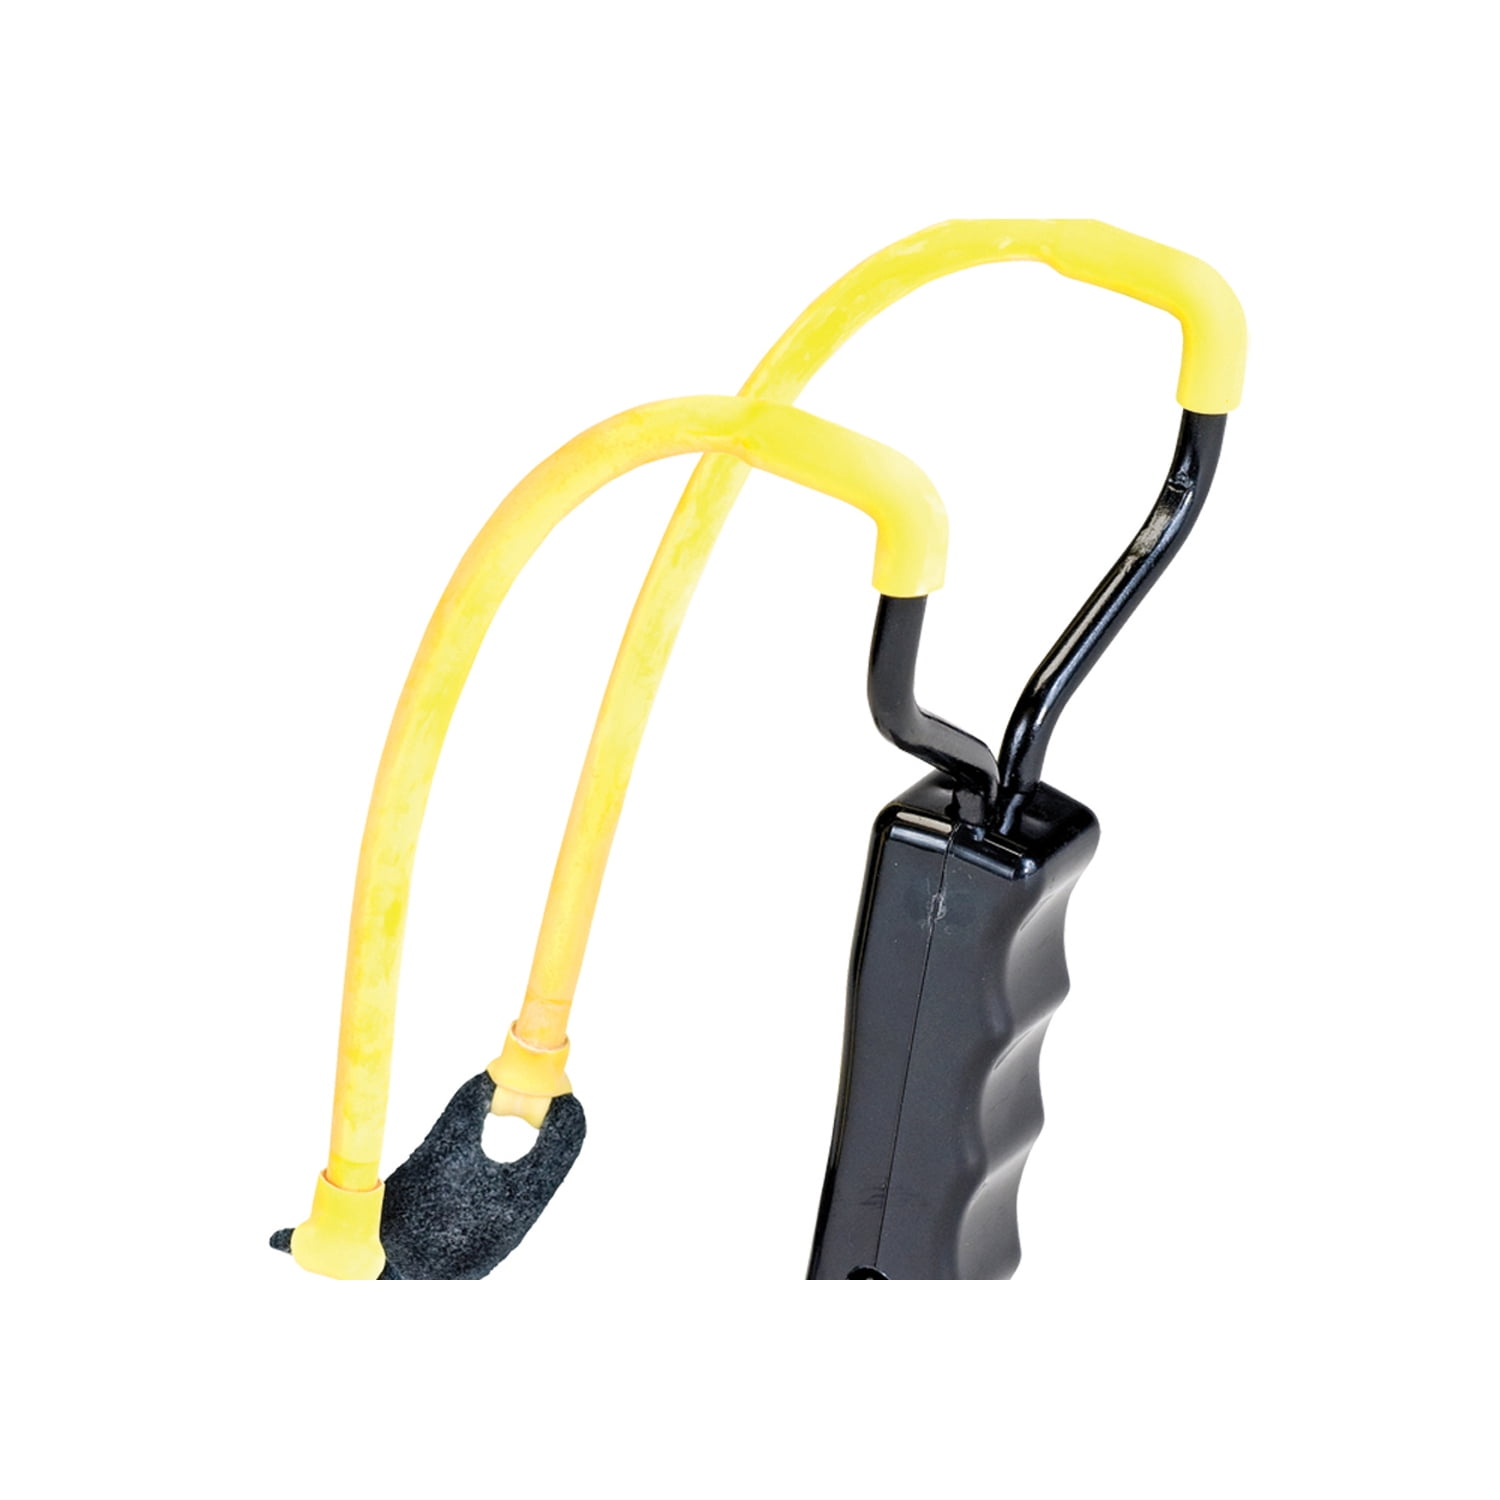 998152-506 for sale online Daisy B52 Powerline Slingshot with Wrist Brace 